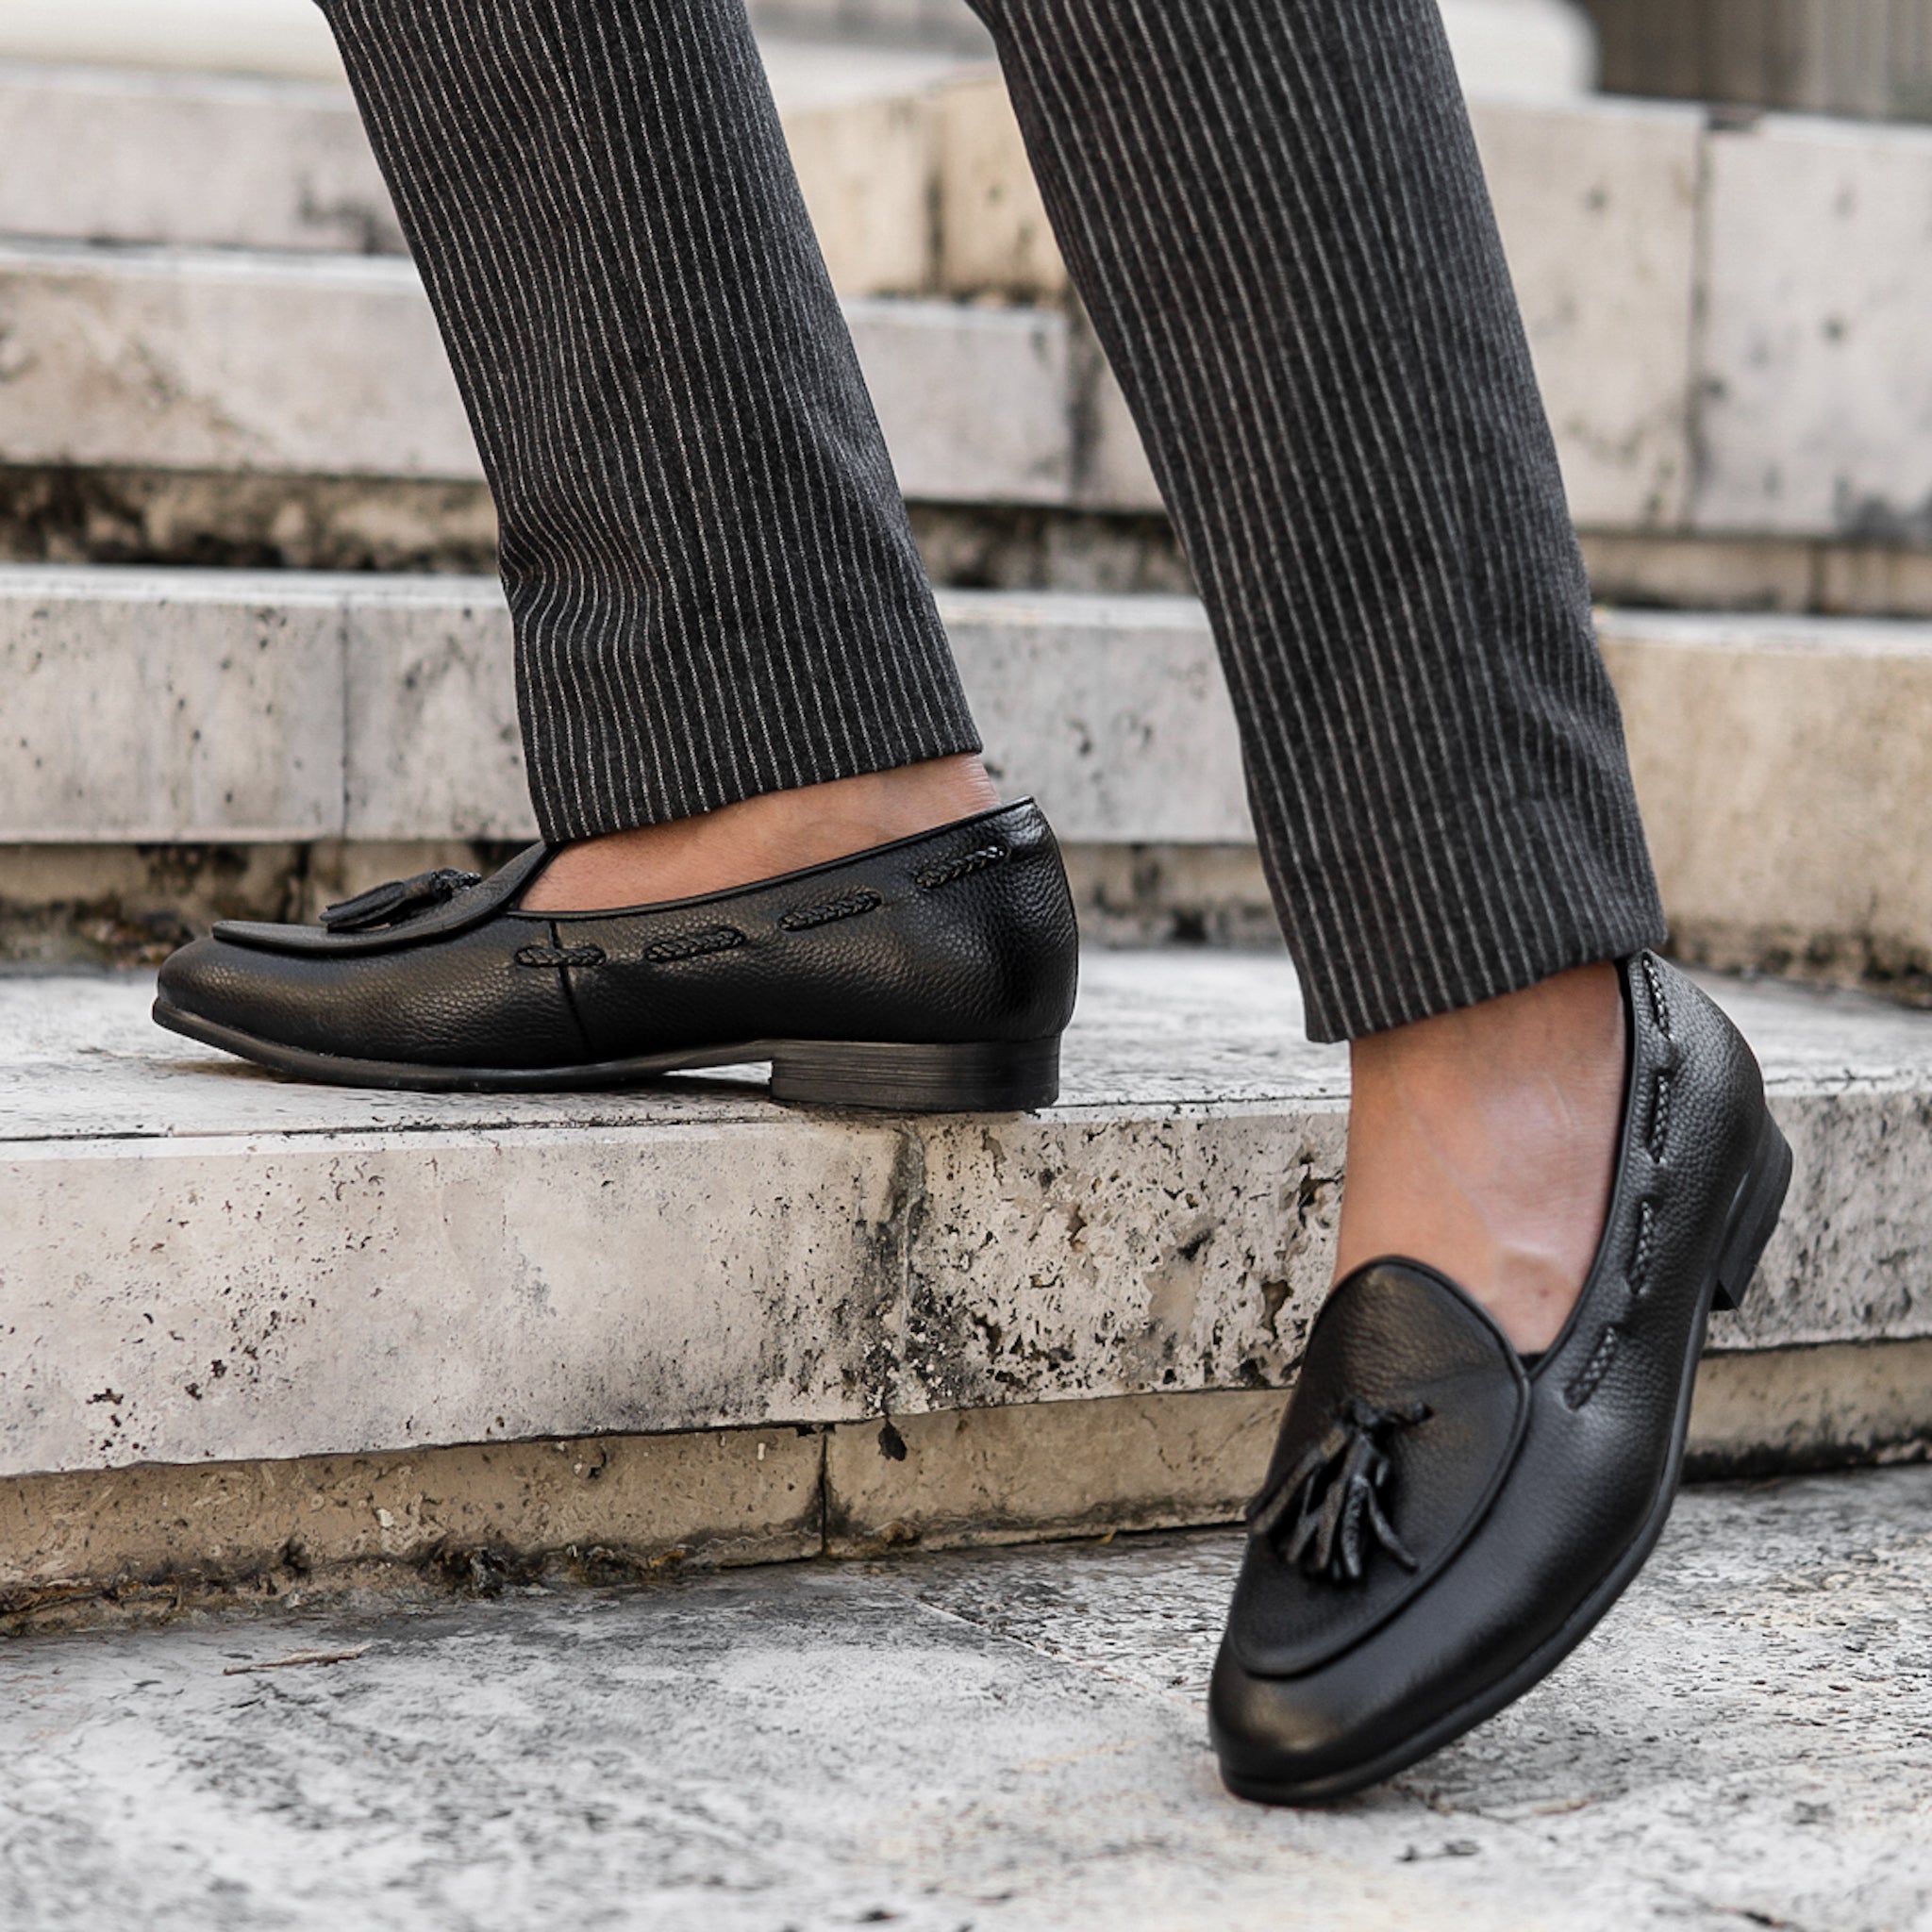 Belgian Loafer With Tassel - Black Pebble Grain Leather - Zeve Shoes